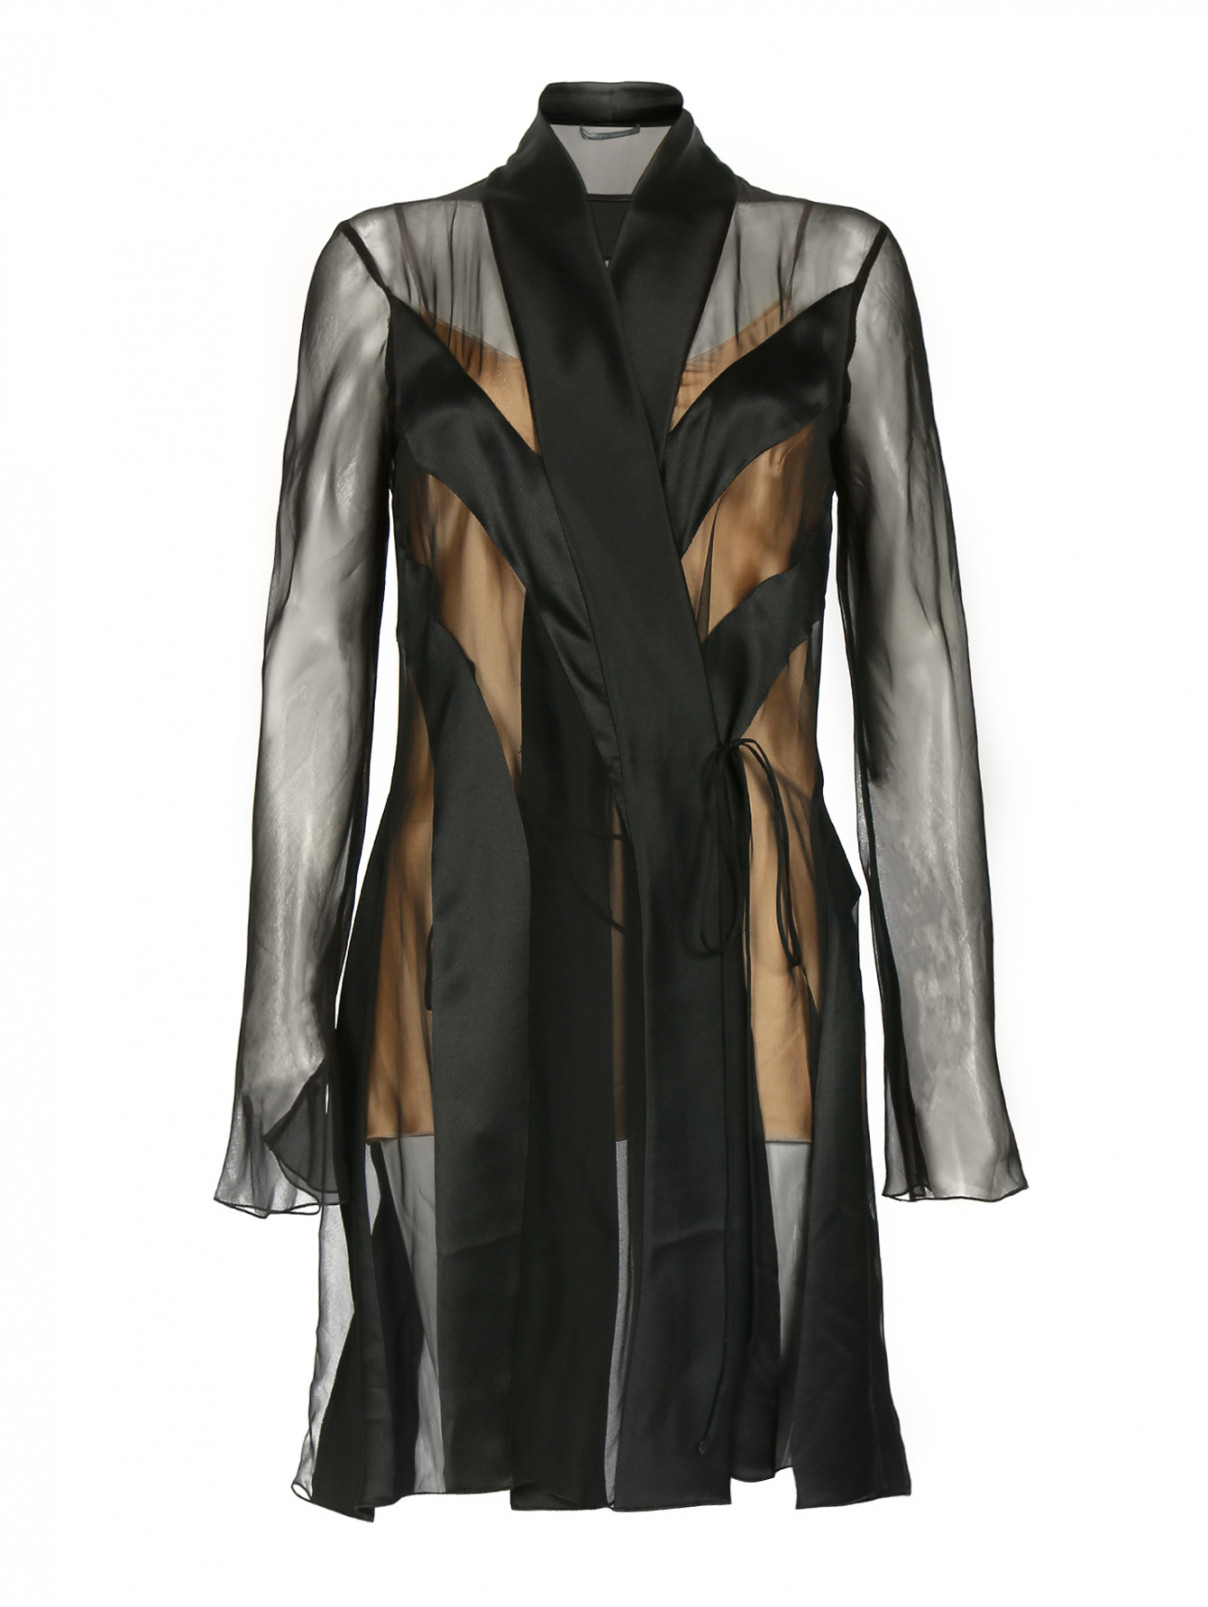 Прозрачная блуза из шелка на завязке Alberta Ferretti  –  Общий вид  – Цвет:  Черный